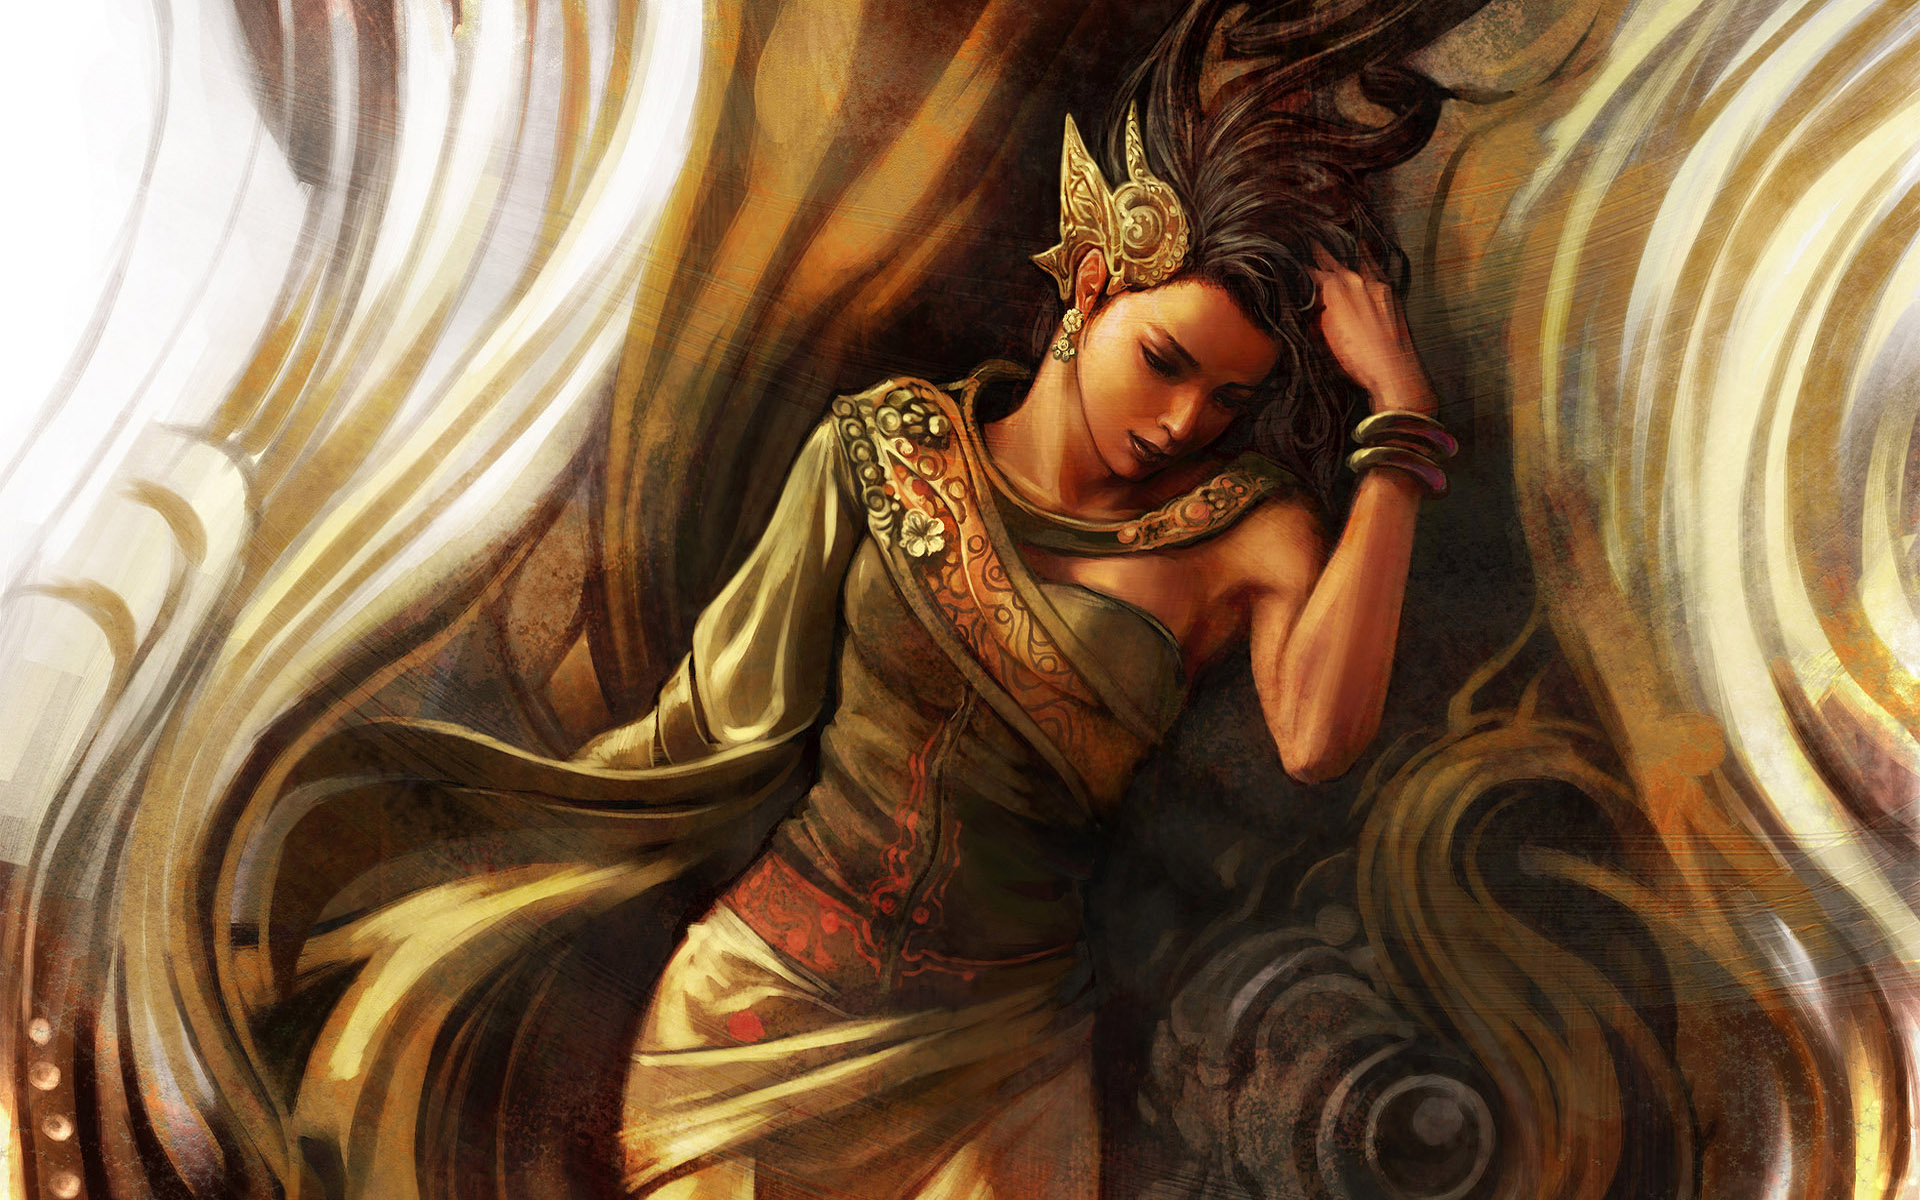 fantasy women wallpaper,cg artwork,mythology,illustration,fictional character,art